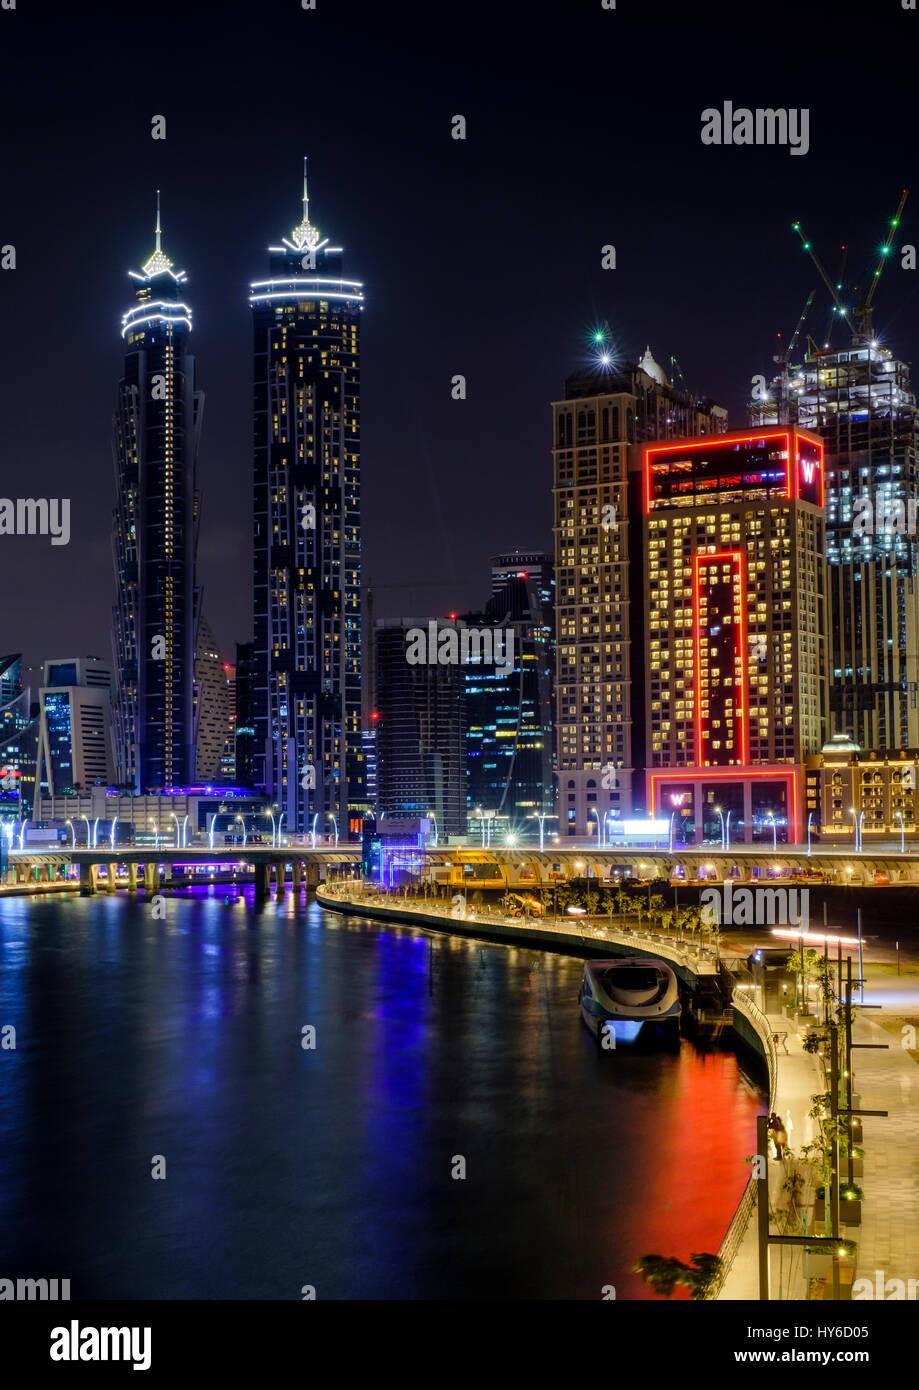 UNITED ARAB EMIRATES, DUBAI - CIRCA JANUARY 2017: The Dubai water canal at night with view of Downtown Dubai Stock Photo